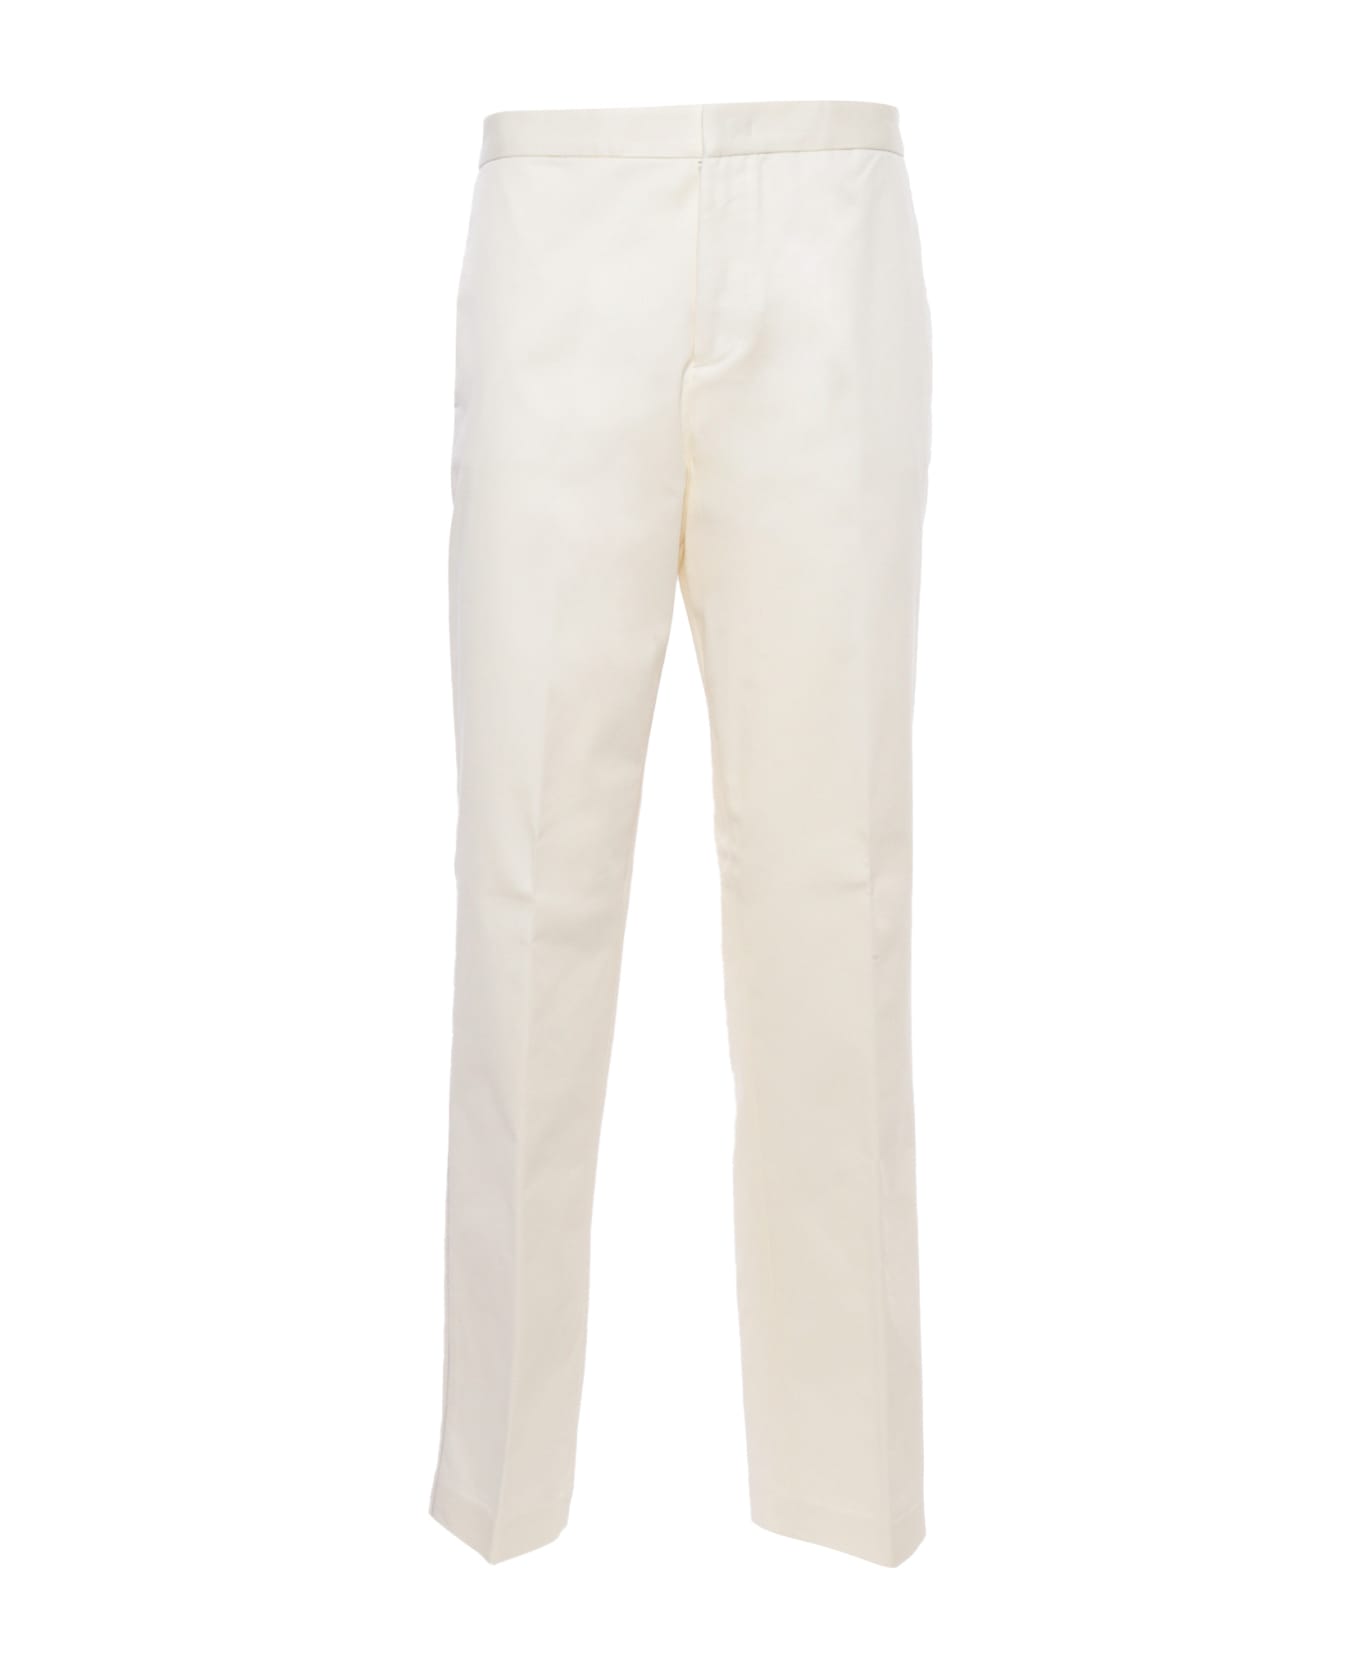 Fabiana Filippi Creamy White Trousers - WHITE